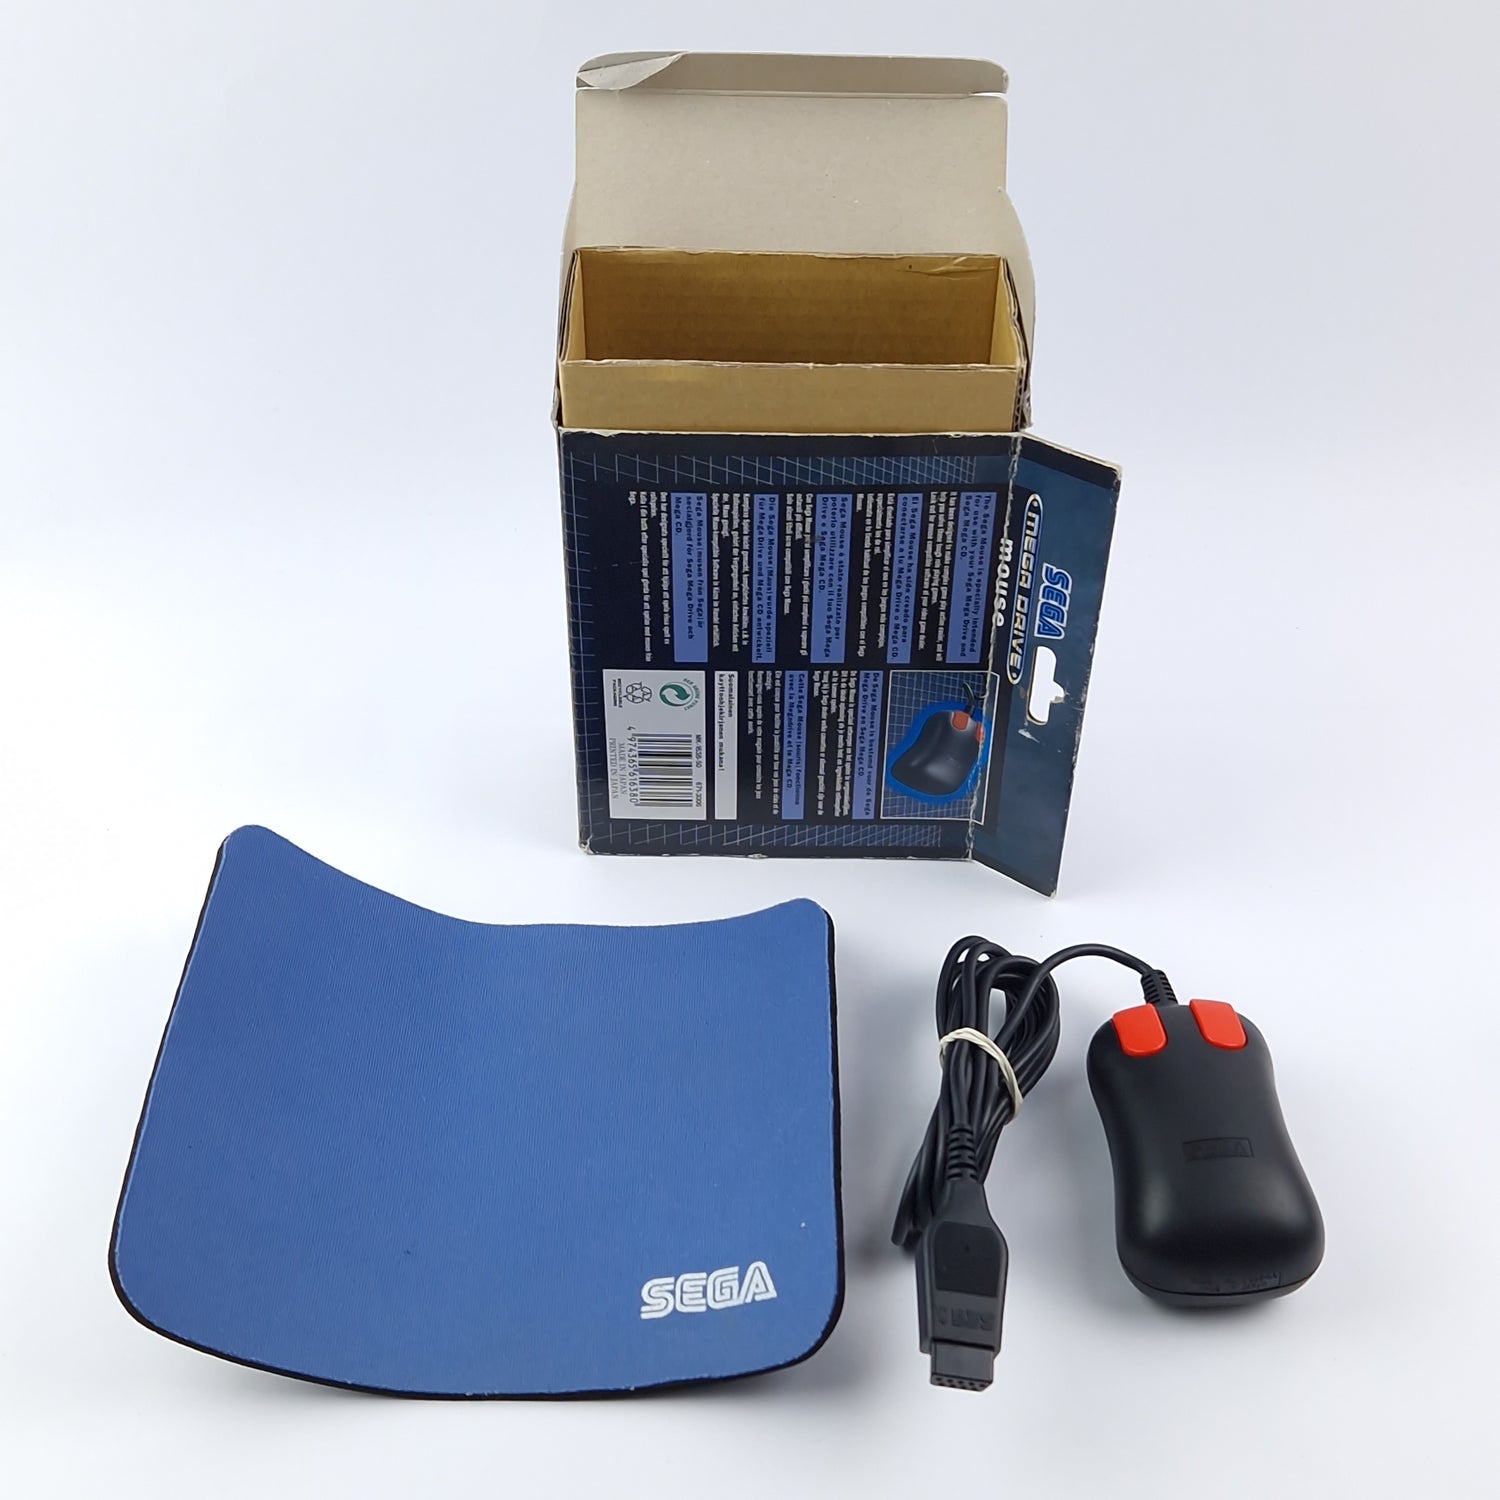 Sega Mega Drive Accessories Item: Mouse + Mousepad + Instructions - OVP Controller